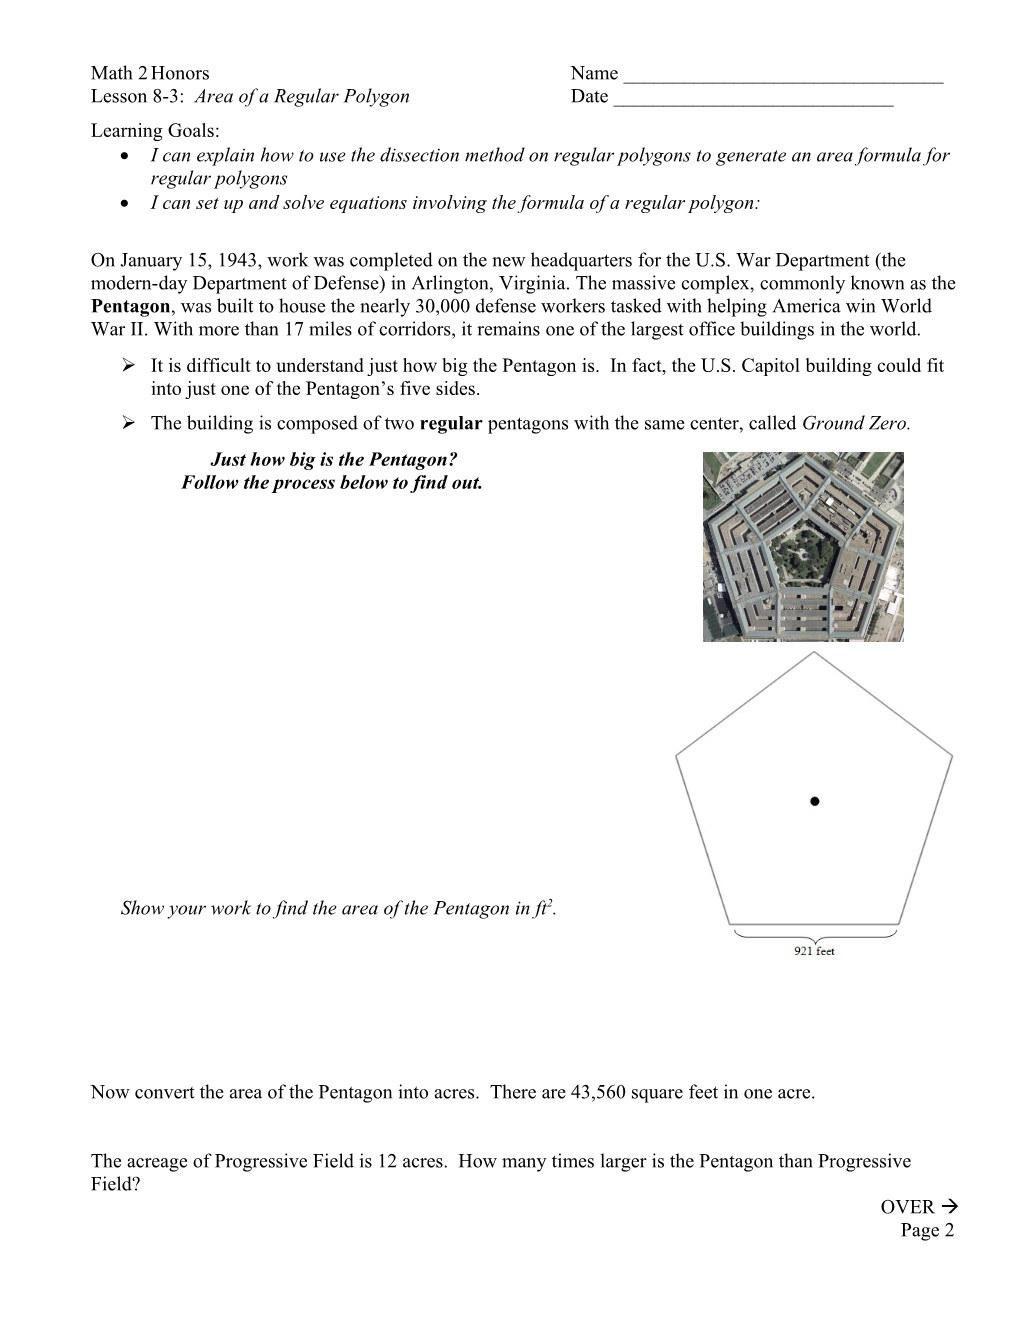 Lesson 8-3: Area of a Regular Polygondate ______